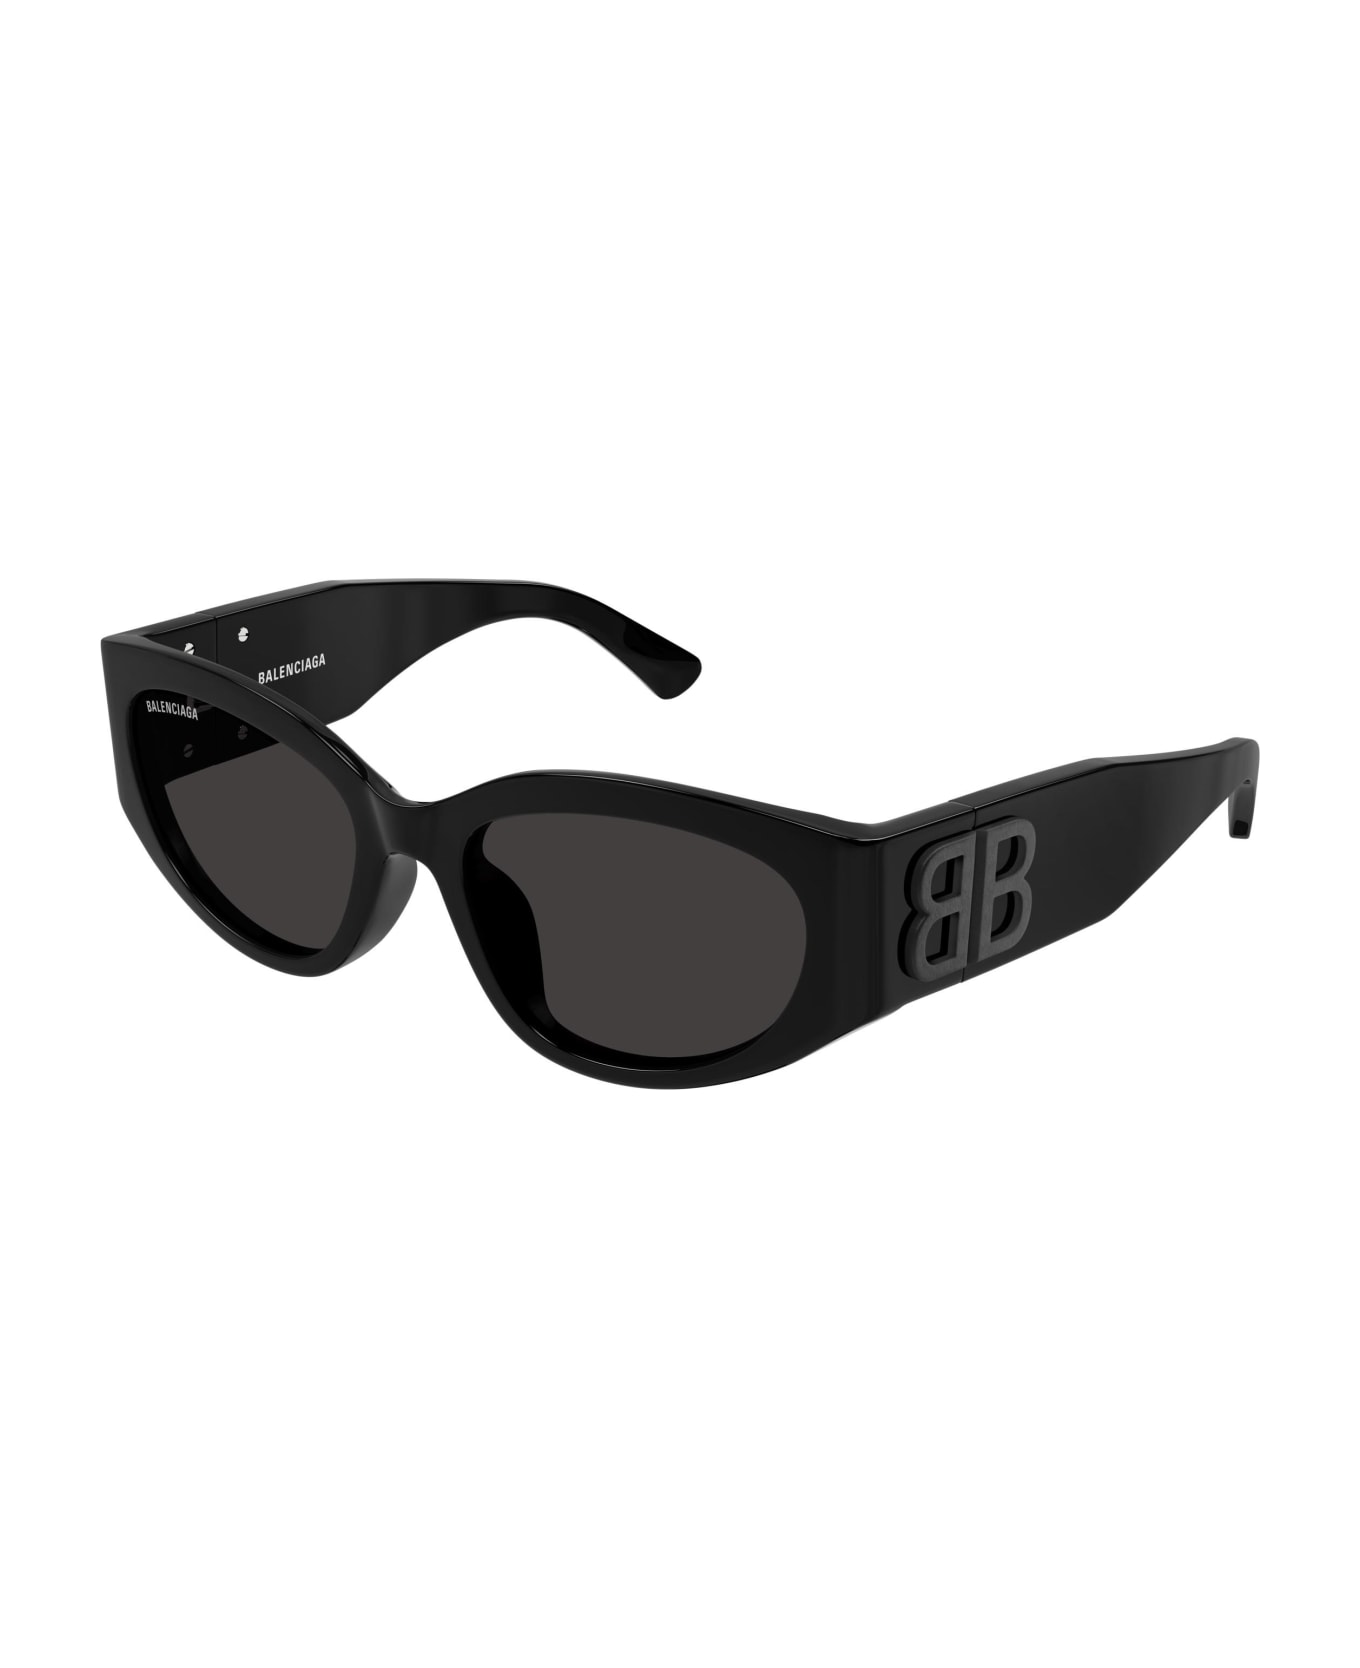 Balenciaga Eyewear Sunglasses - Nero/Grigio